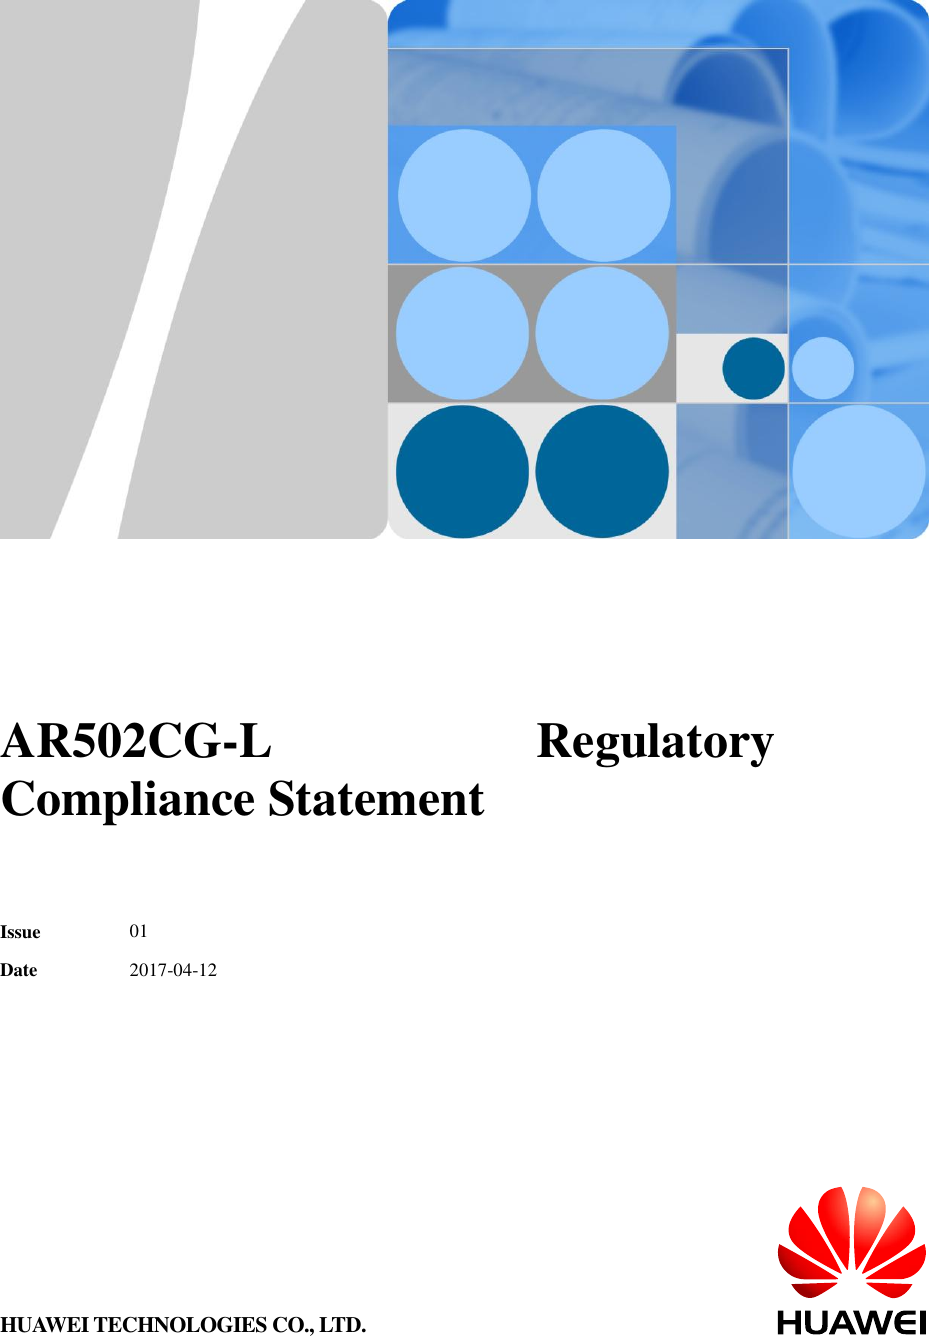           AR502CG-L  Regulatory Compliance Statement   Issue  01 Date  2017-04-12 HUAWEI TECHNOLOGIES CO., LTD. 